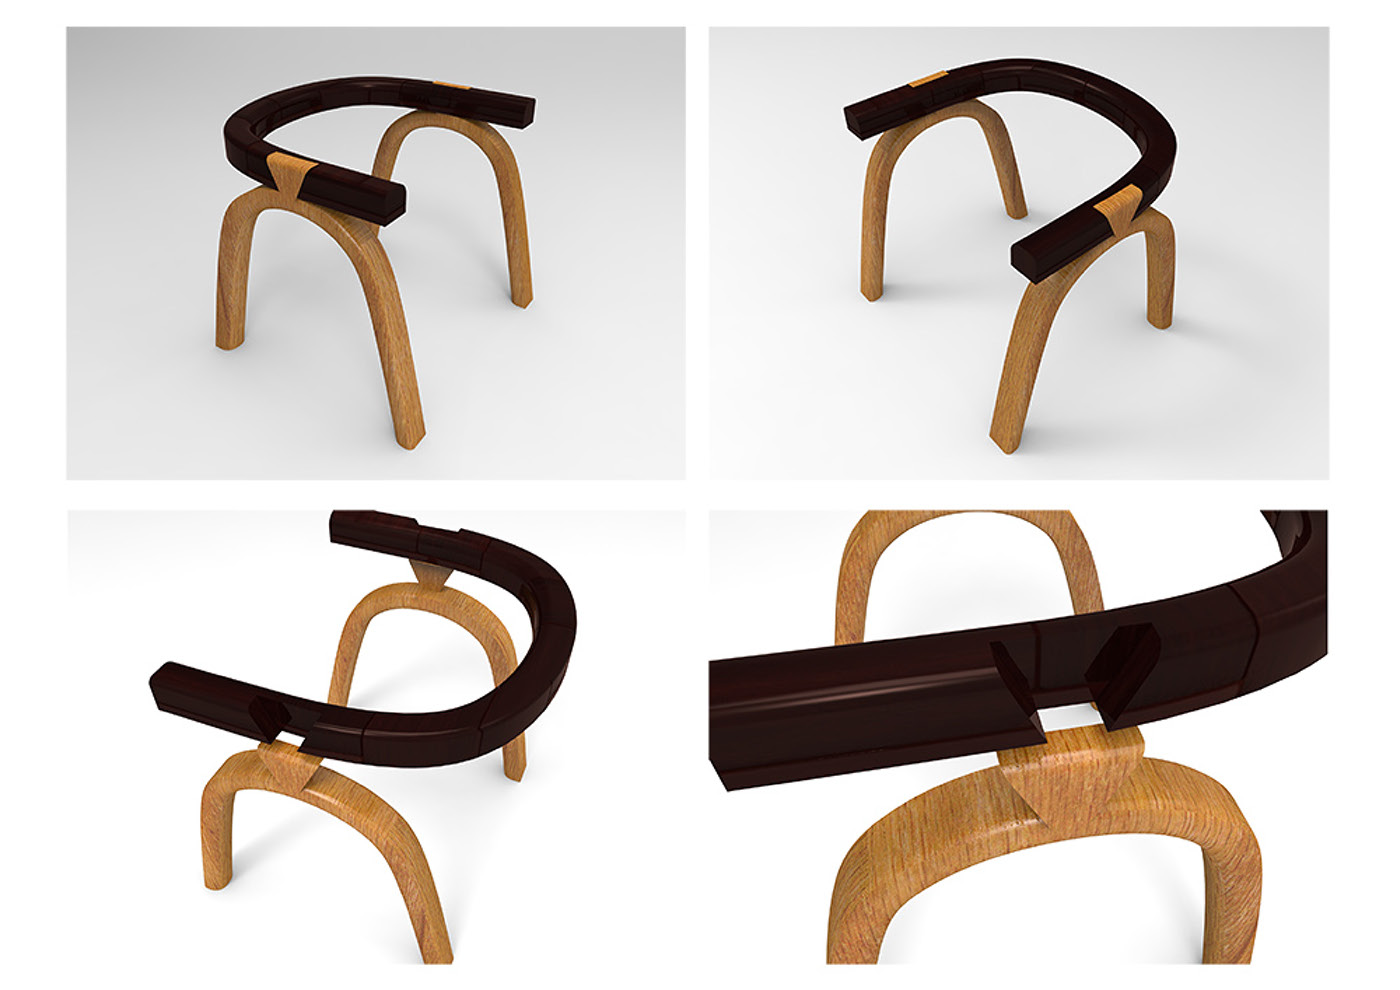 wood joints Carpentry furniture cabinet maker armchair handmade craft woodworking design